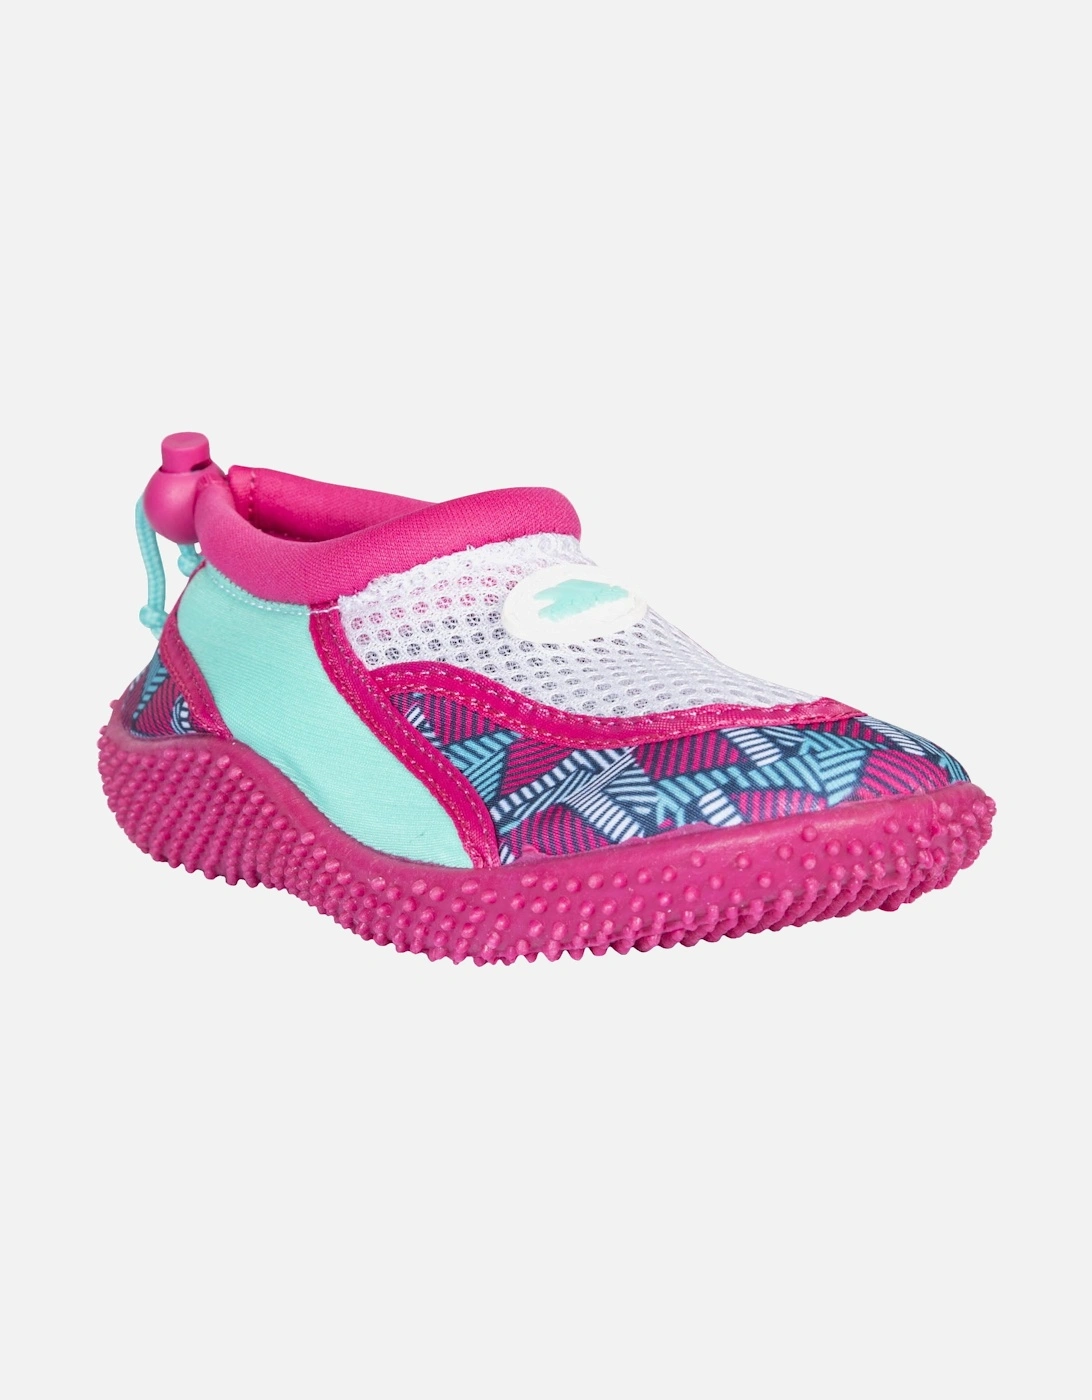 Kids Squidette Stretch Aqua Shoes - Pink, 7 of 6